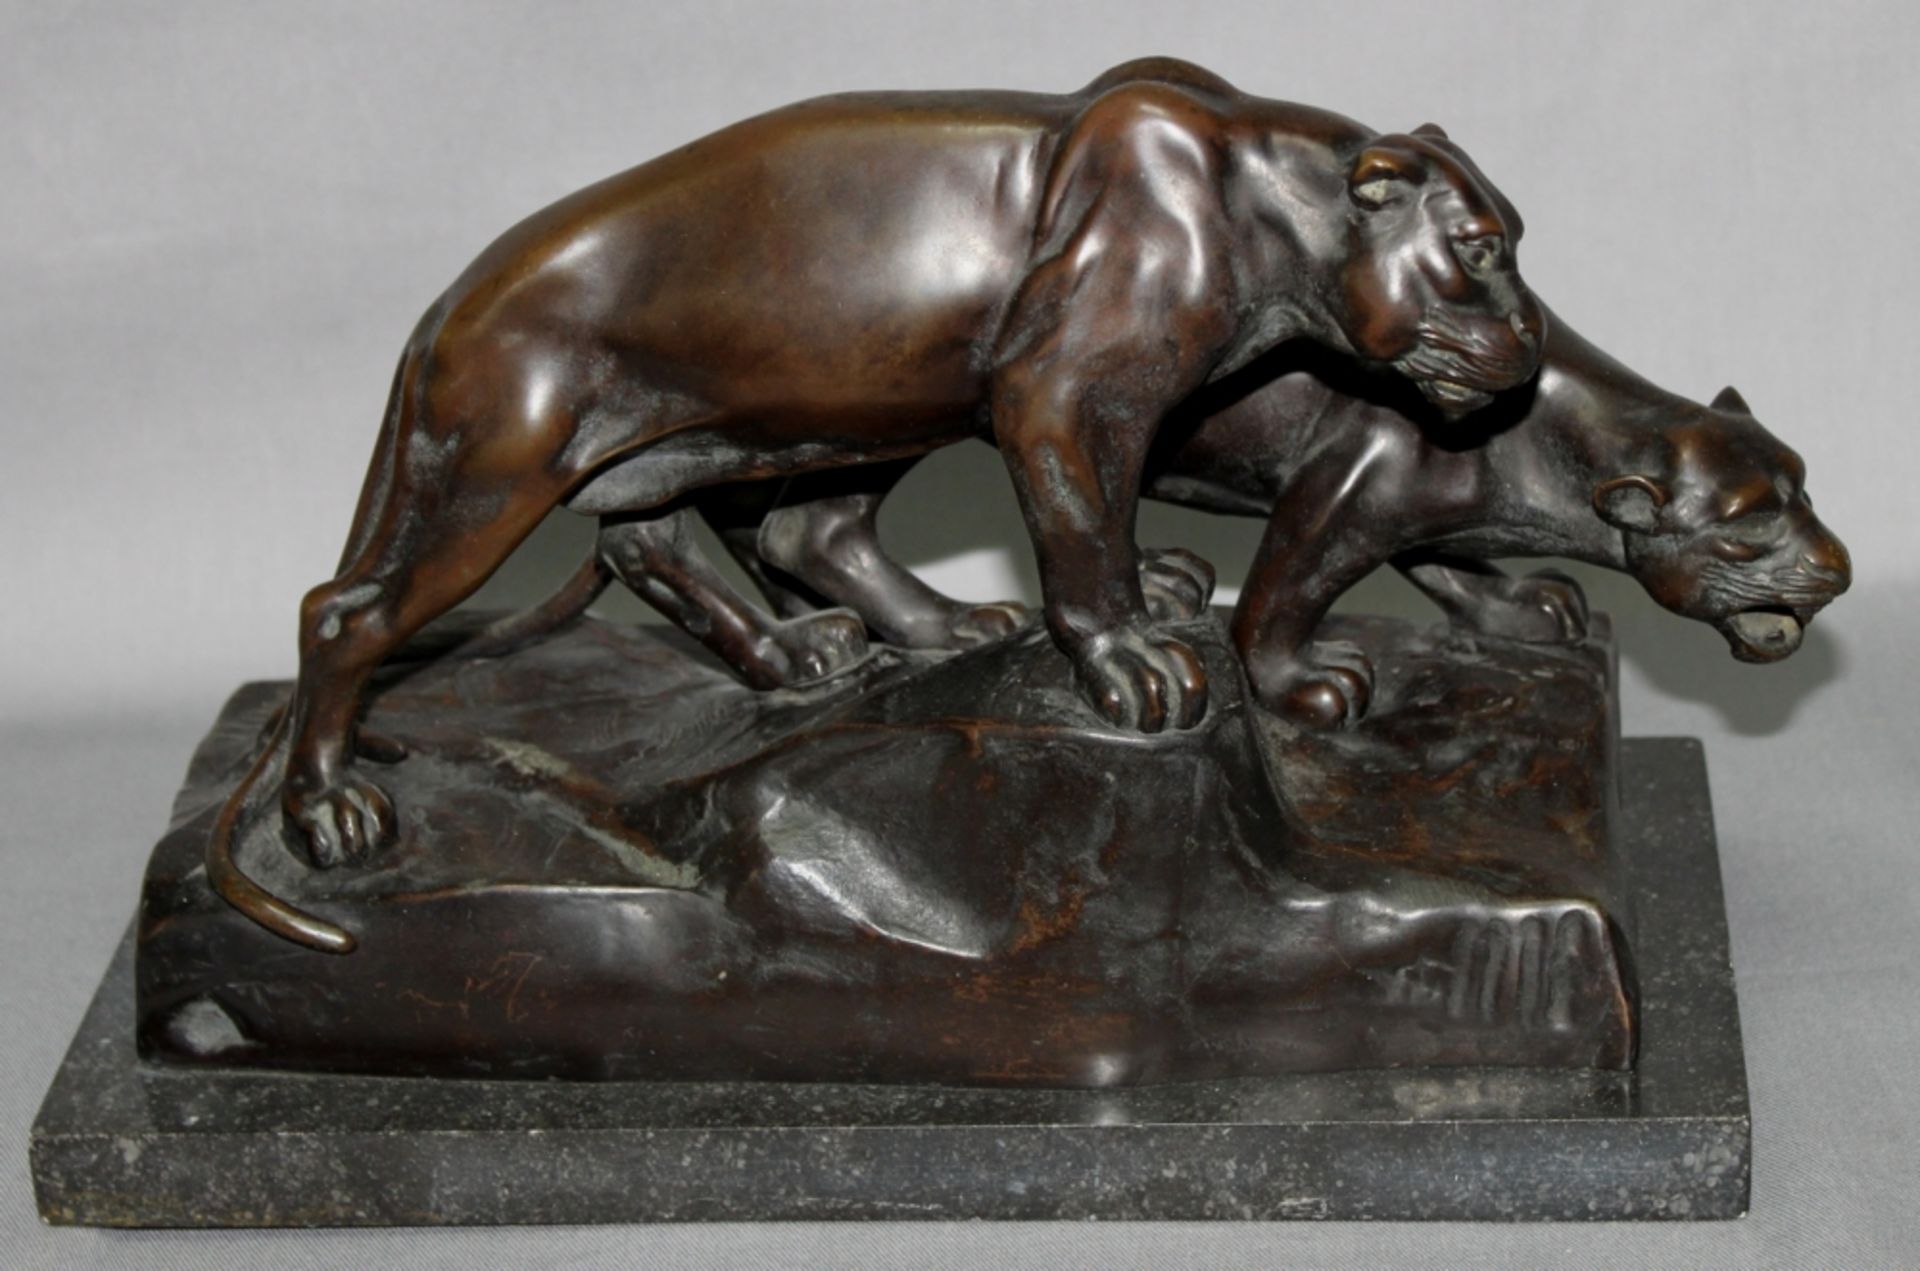 Metall. Bronzeskulptur. Hertel, Oskar. “Zwei Panther“. Bronzeskulptur (dunkel patiniert) auf flachem